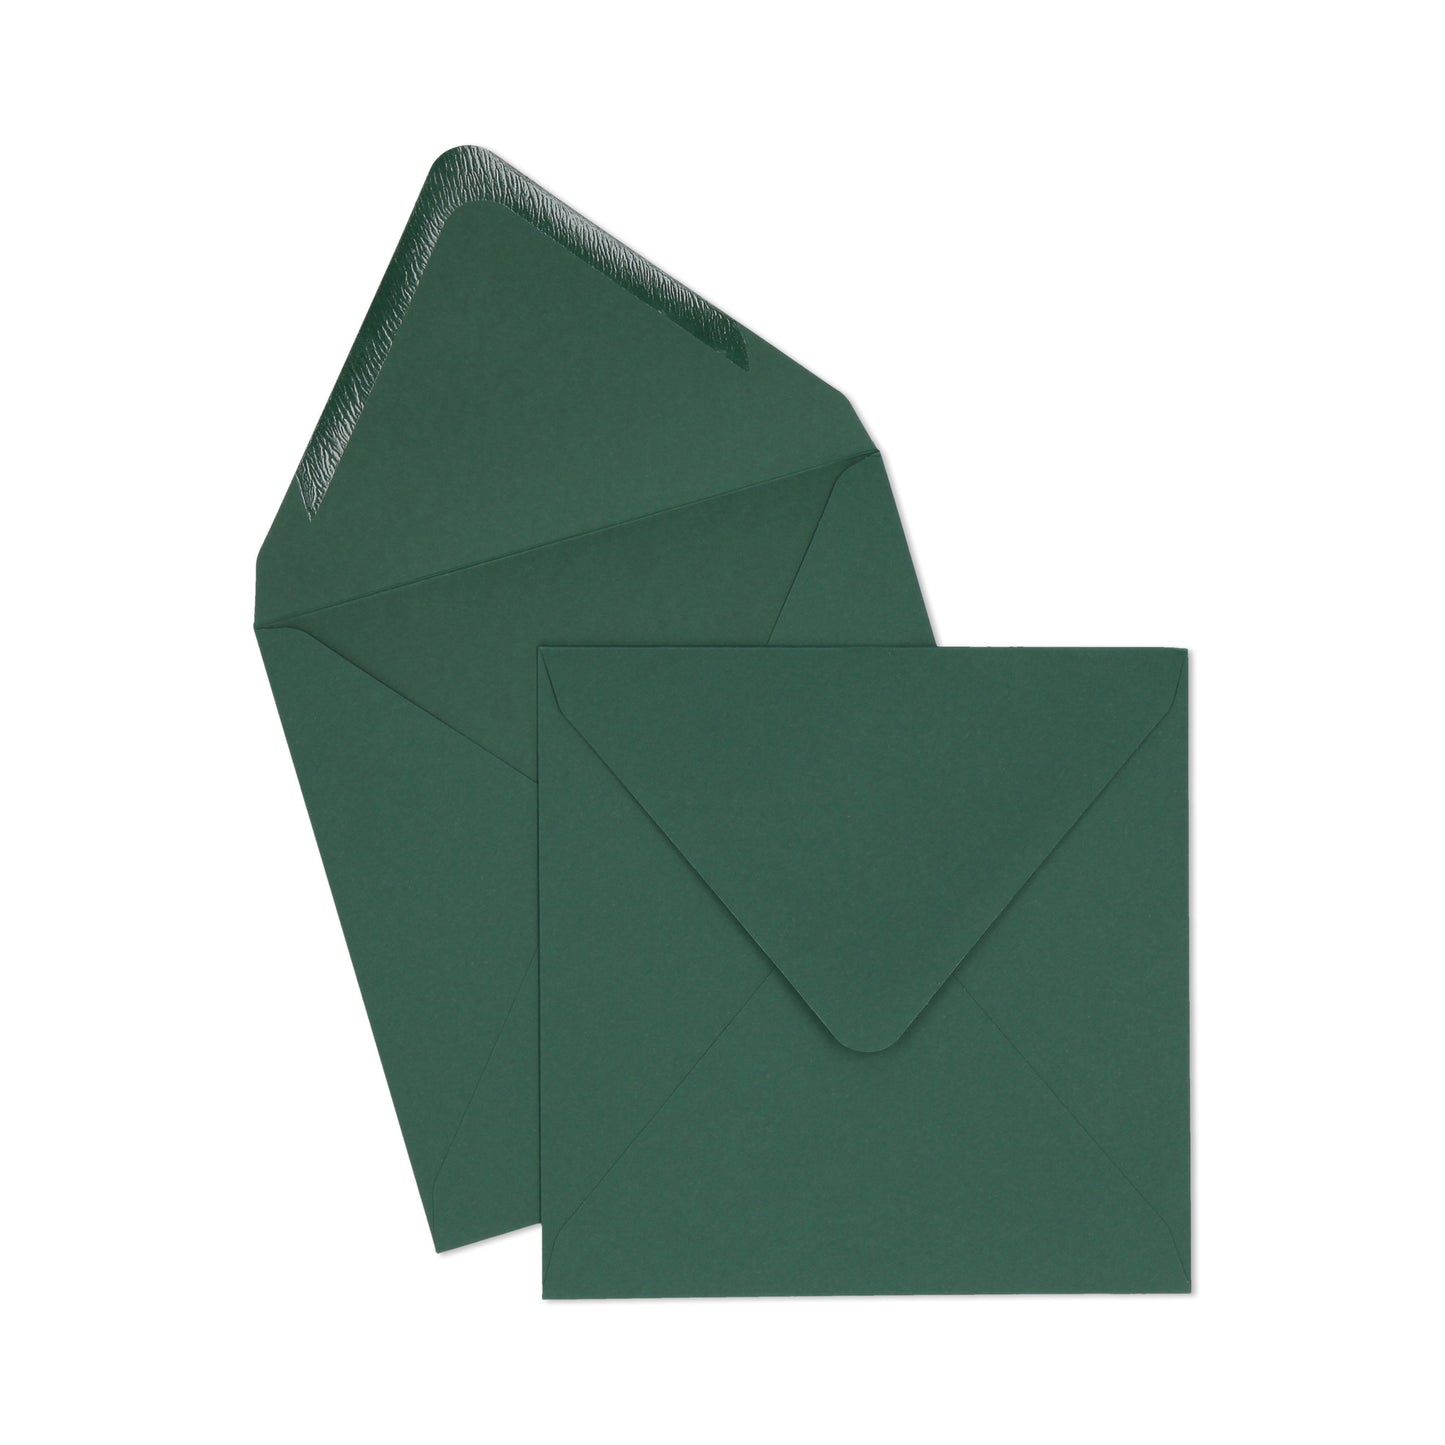 Pine Green CD Envelope - 10 units